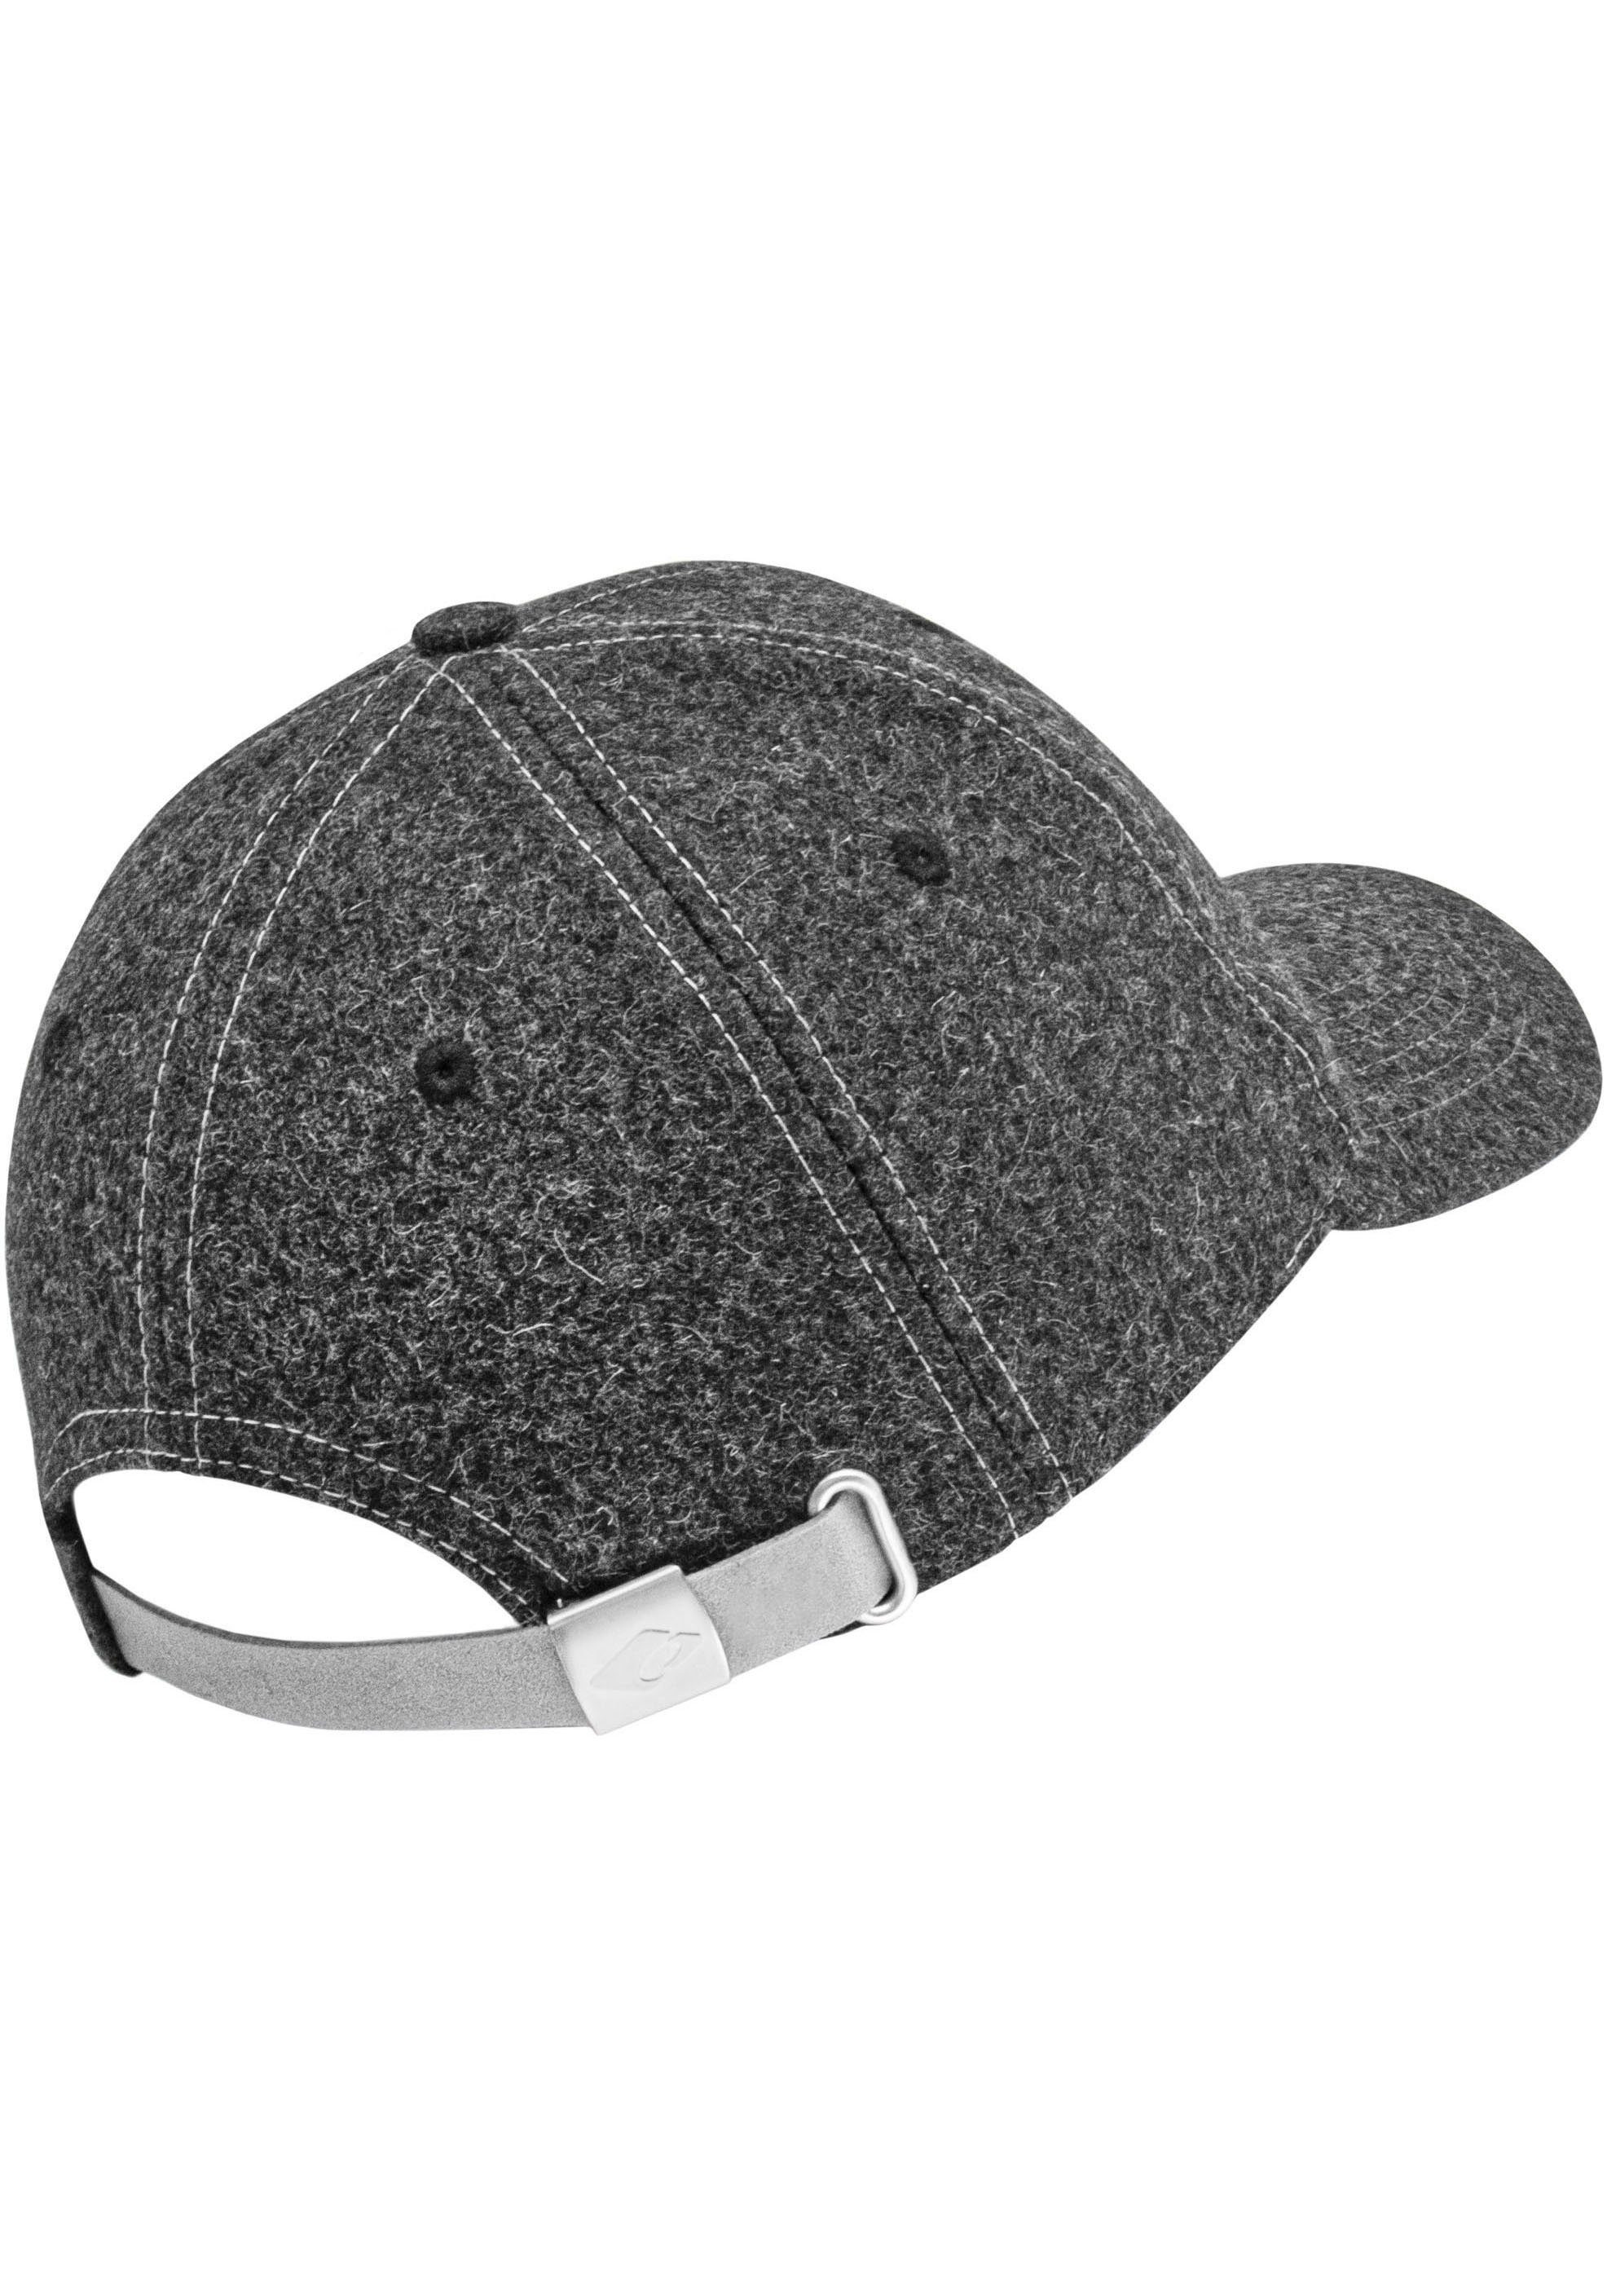 chillouts Baseball Cap Material grey dark Mateo Wasserabweisendes Hat